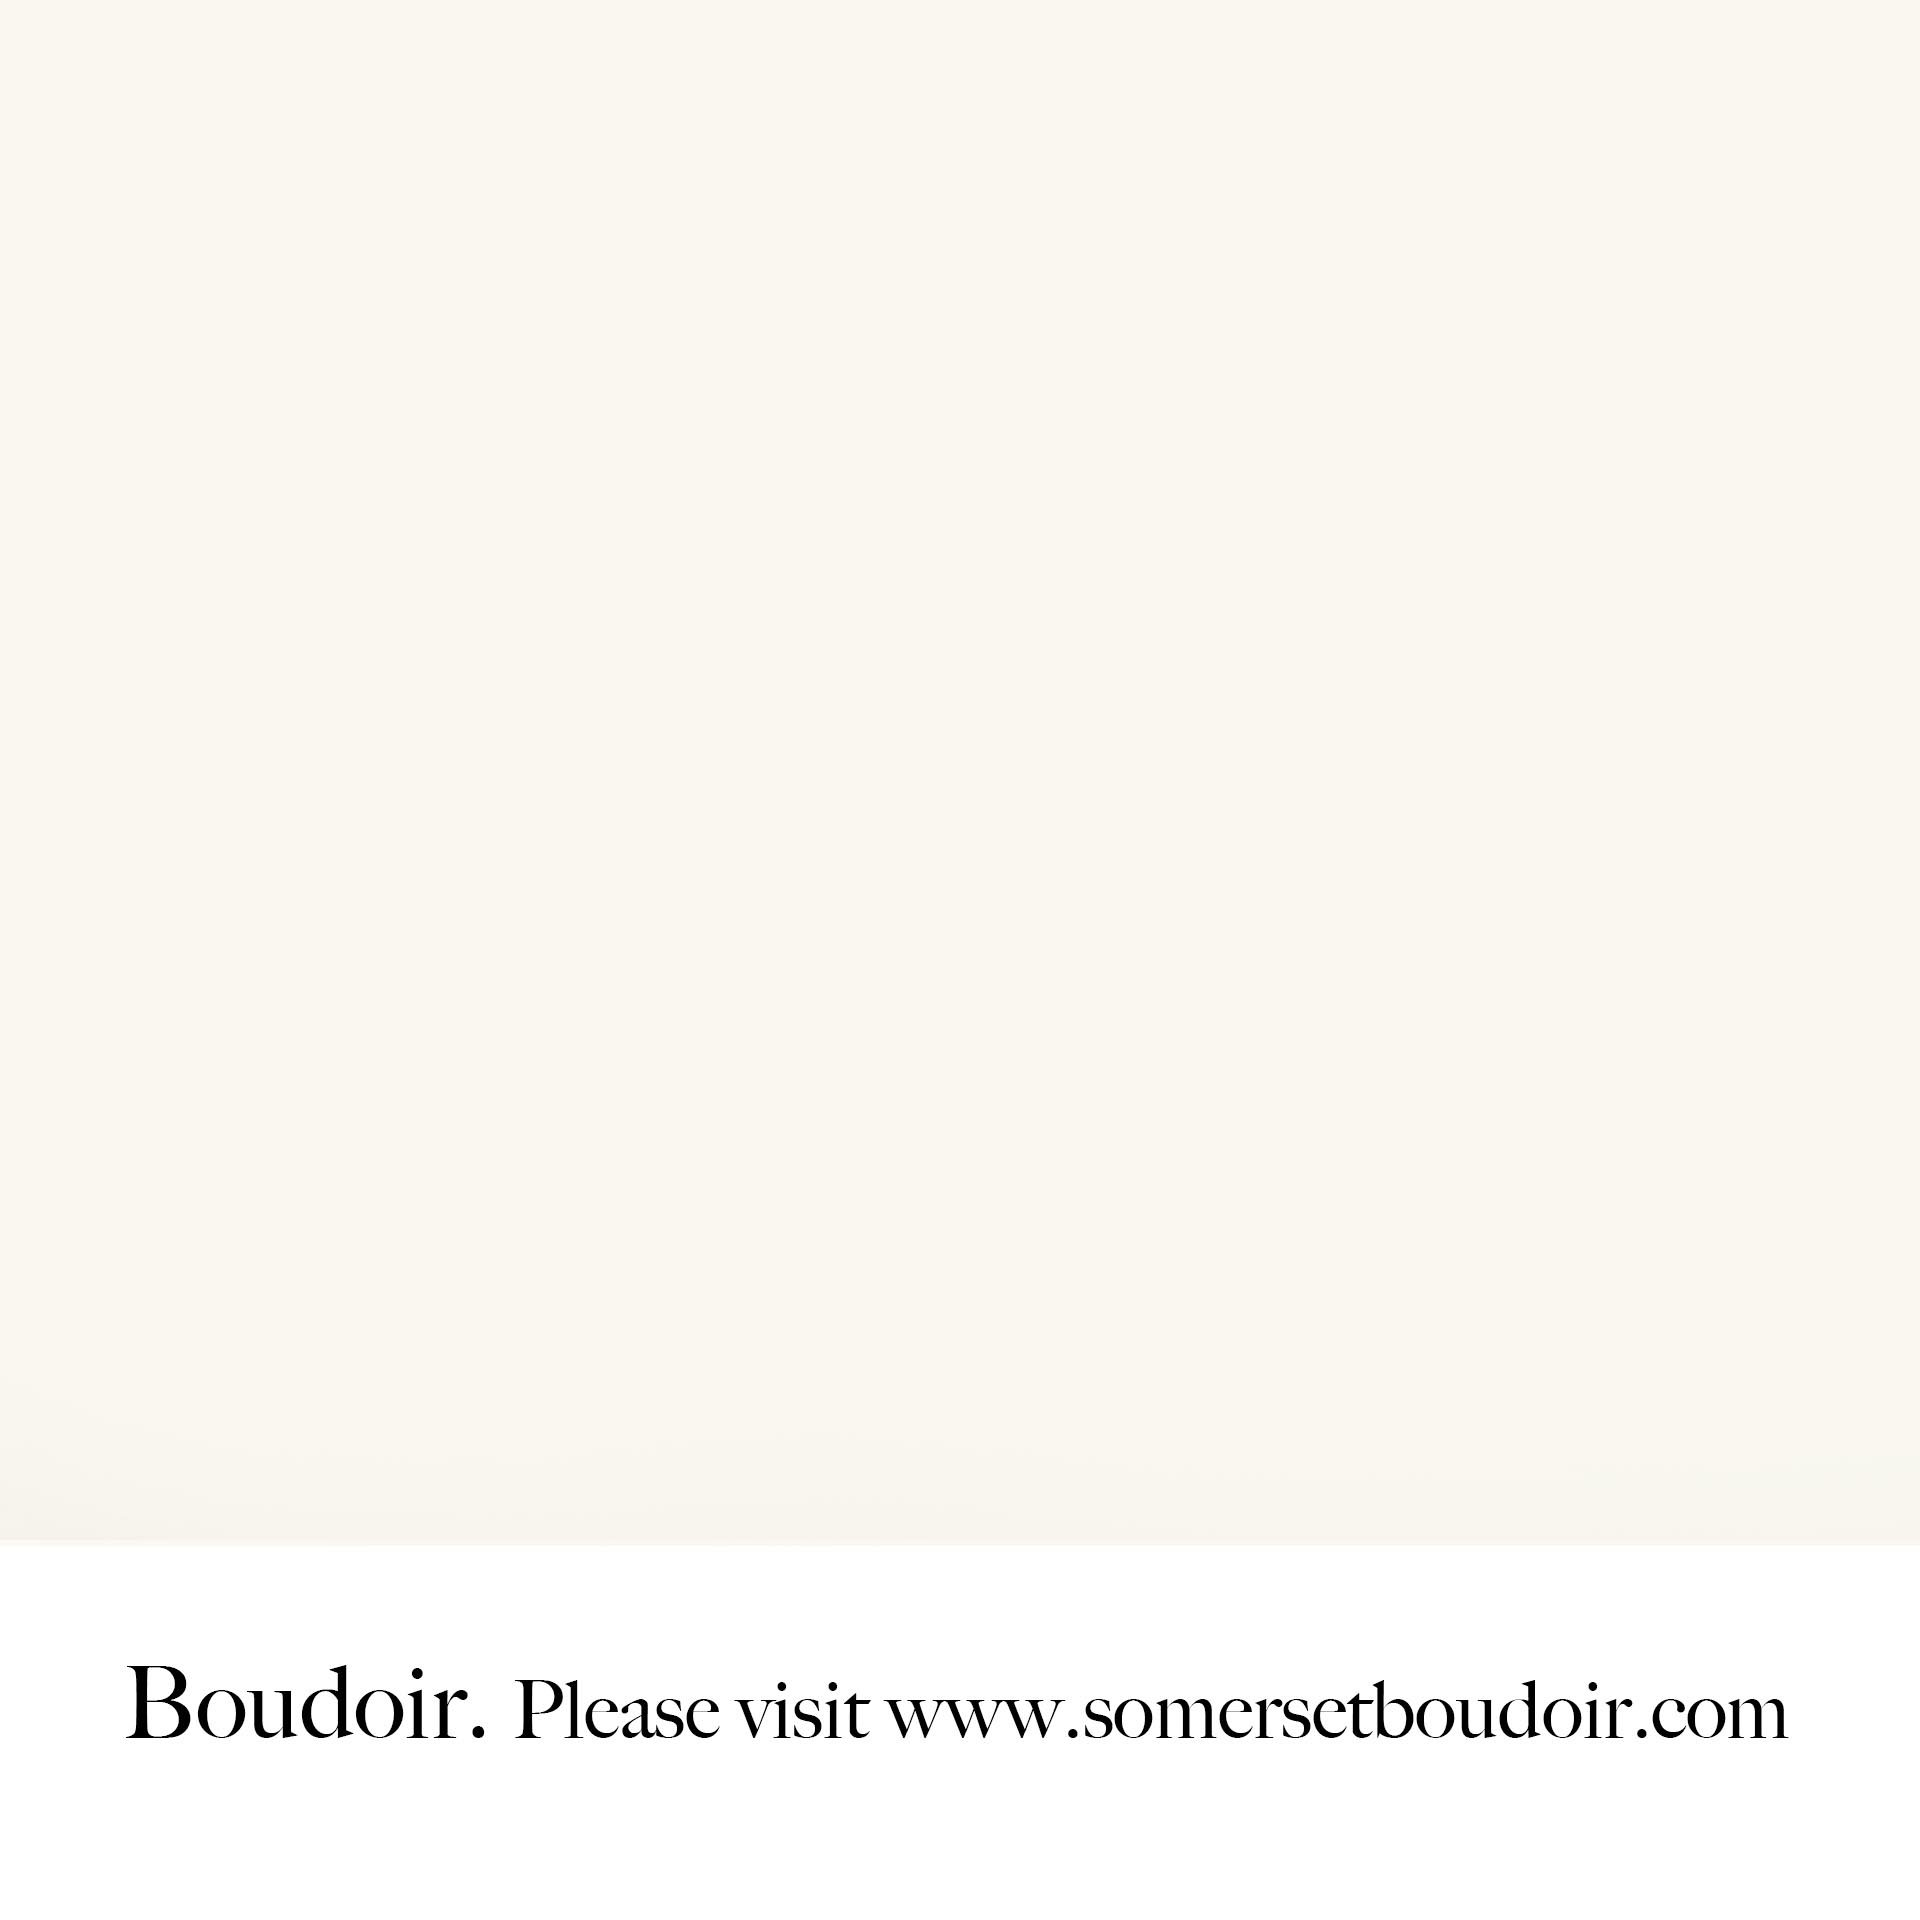 Somerset boudoir website info.jpg